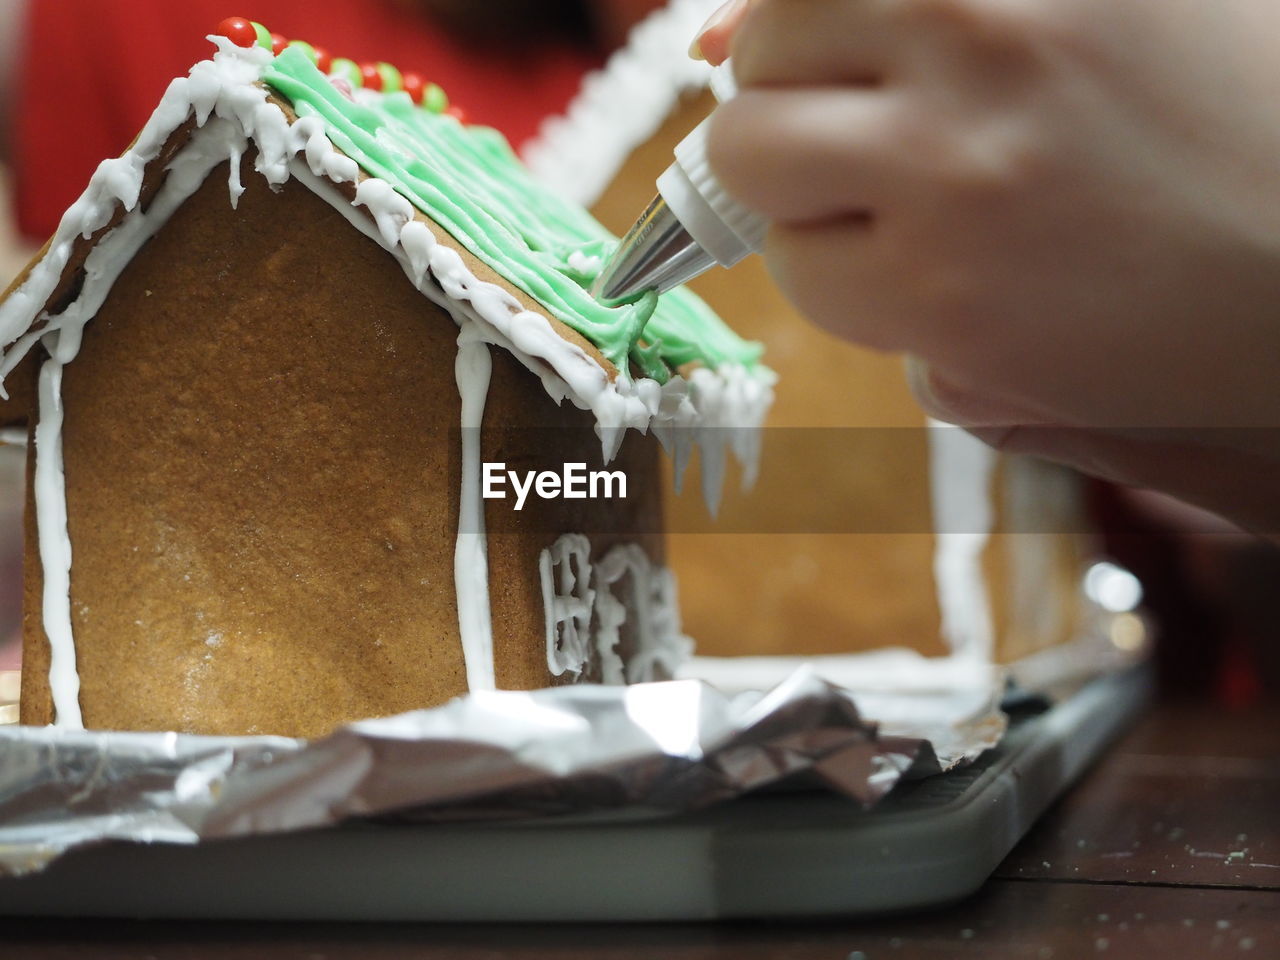 Girls making gingerbread village, happy holidays.